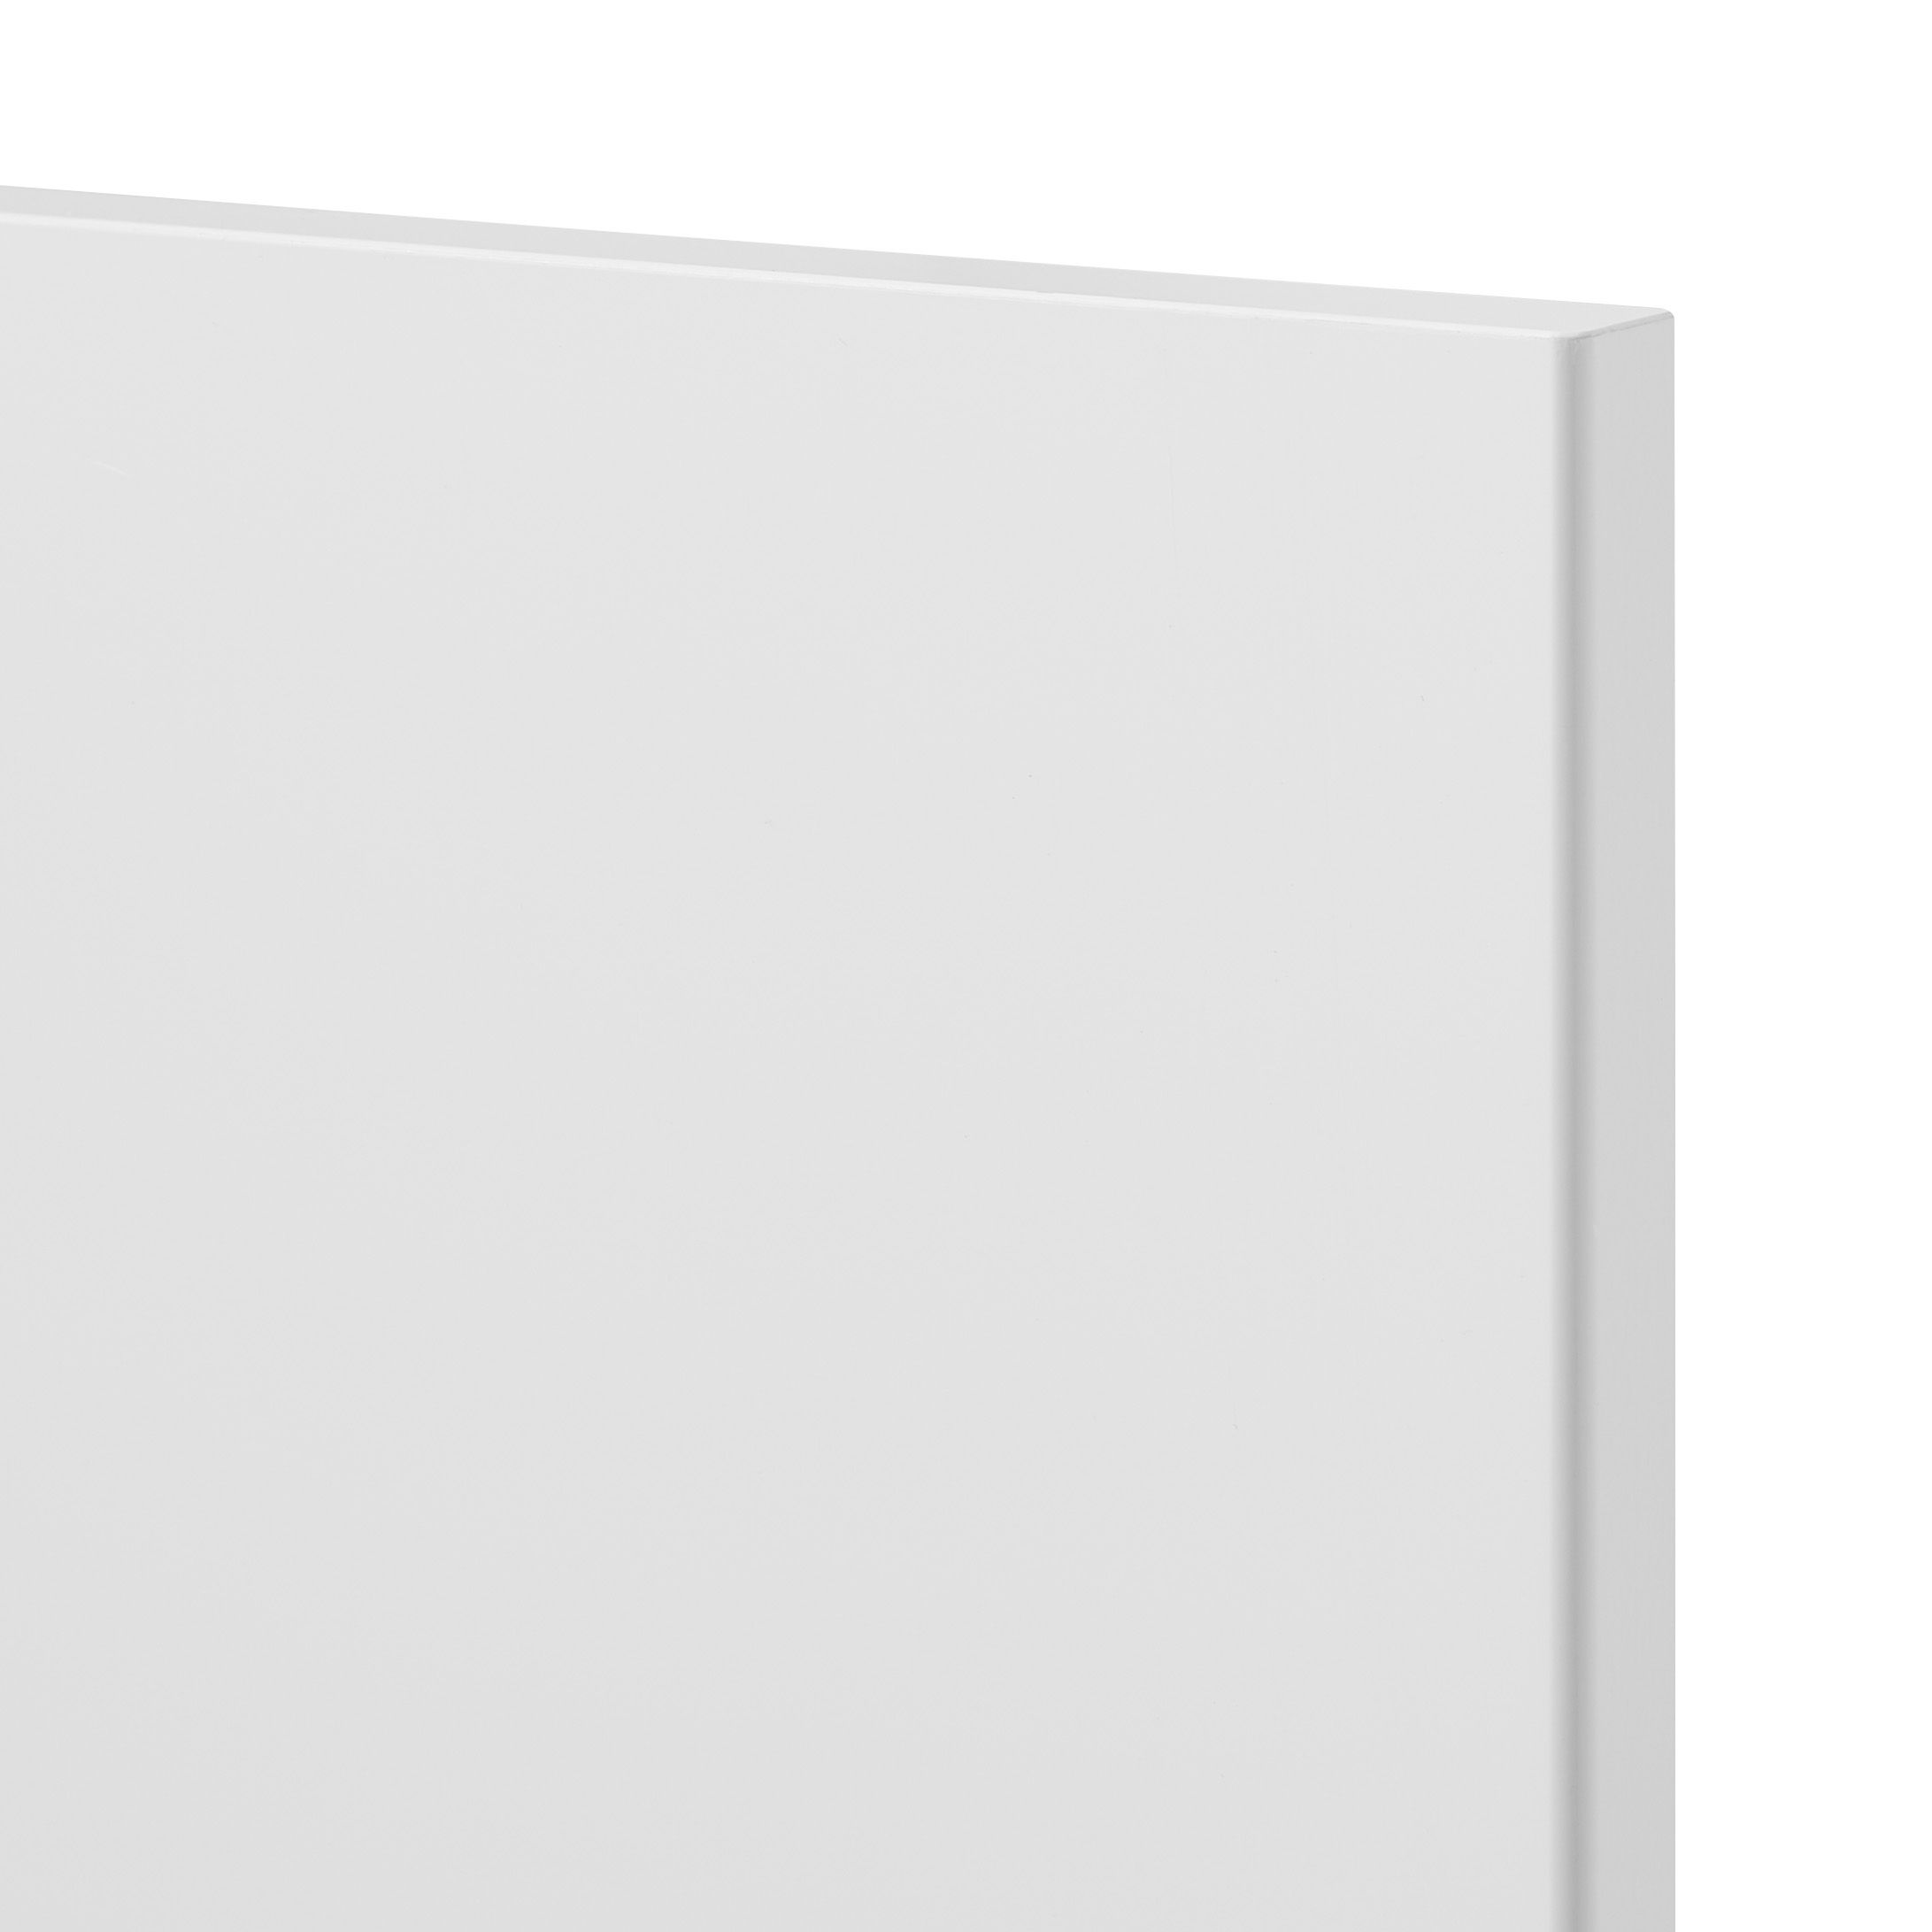 GoodHome Stevia Gloss white slab Drawer front, bridging door & bi fold door, (W)1000mm (H)356mm (T)18mm